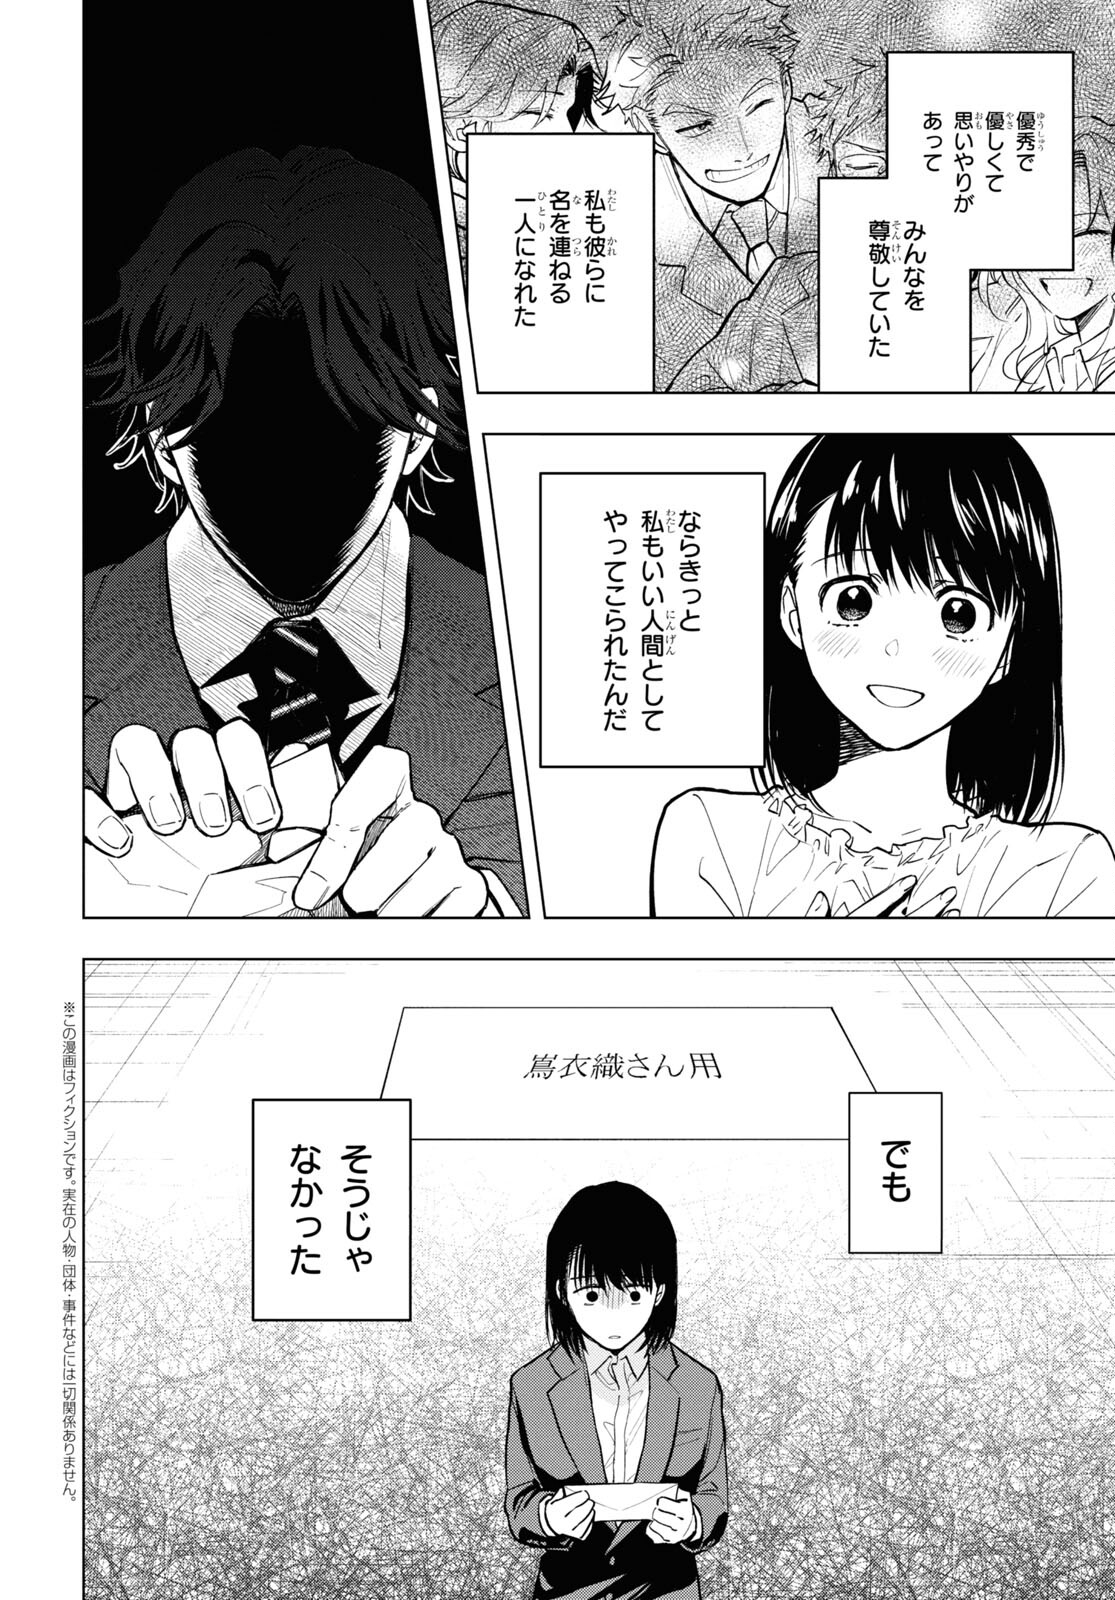 Rokunin no Usotsuki na Daigakusei (Plus 1) - Chapter 15 - Page 2